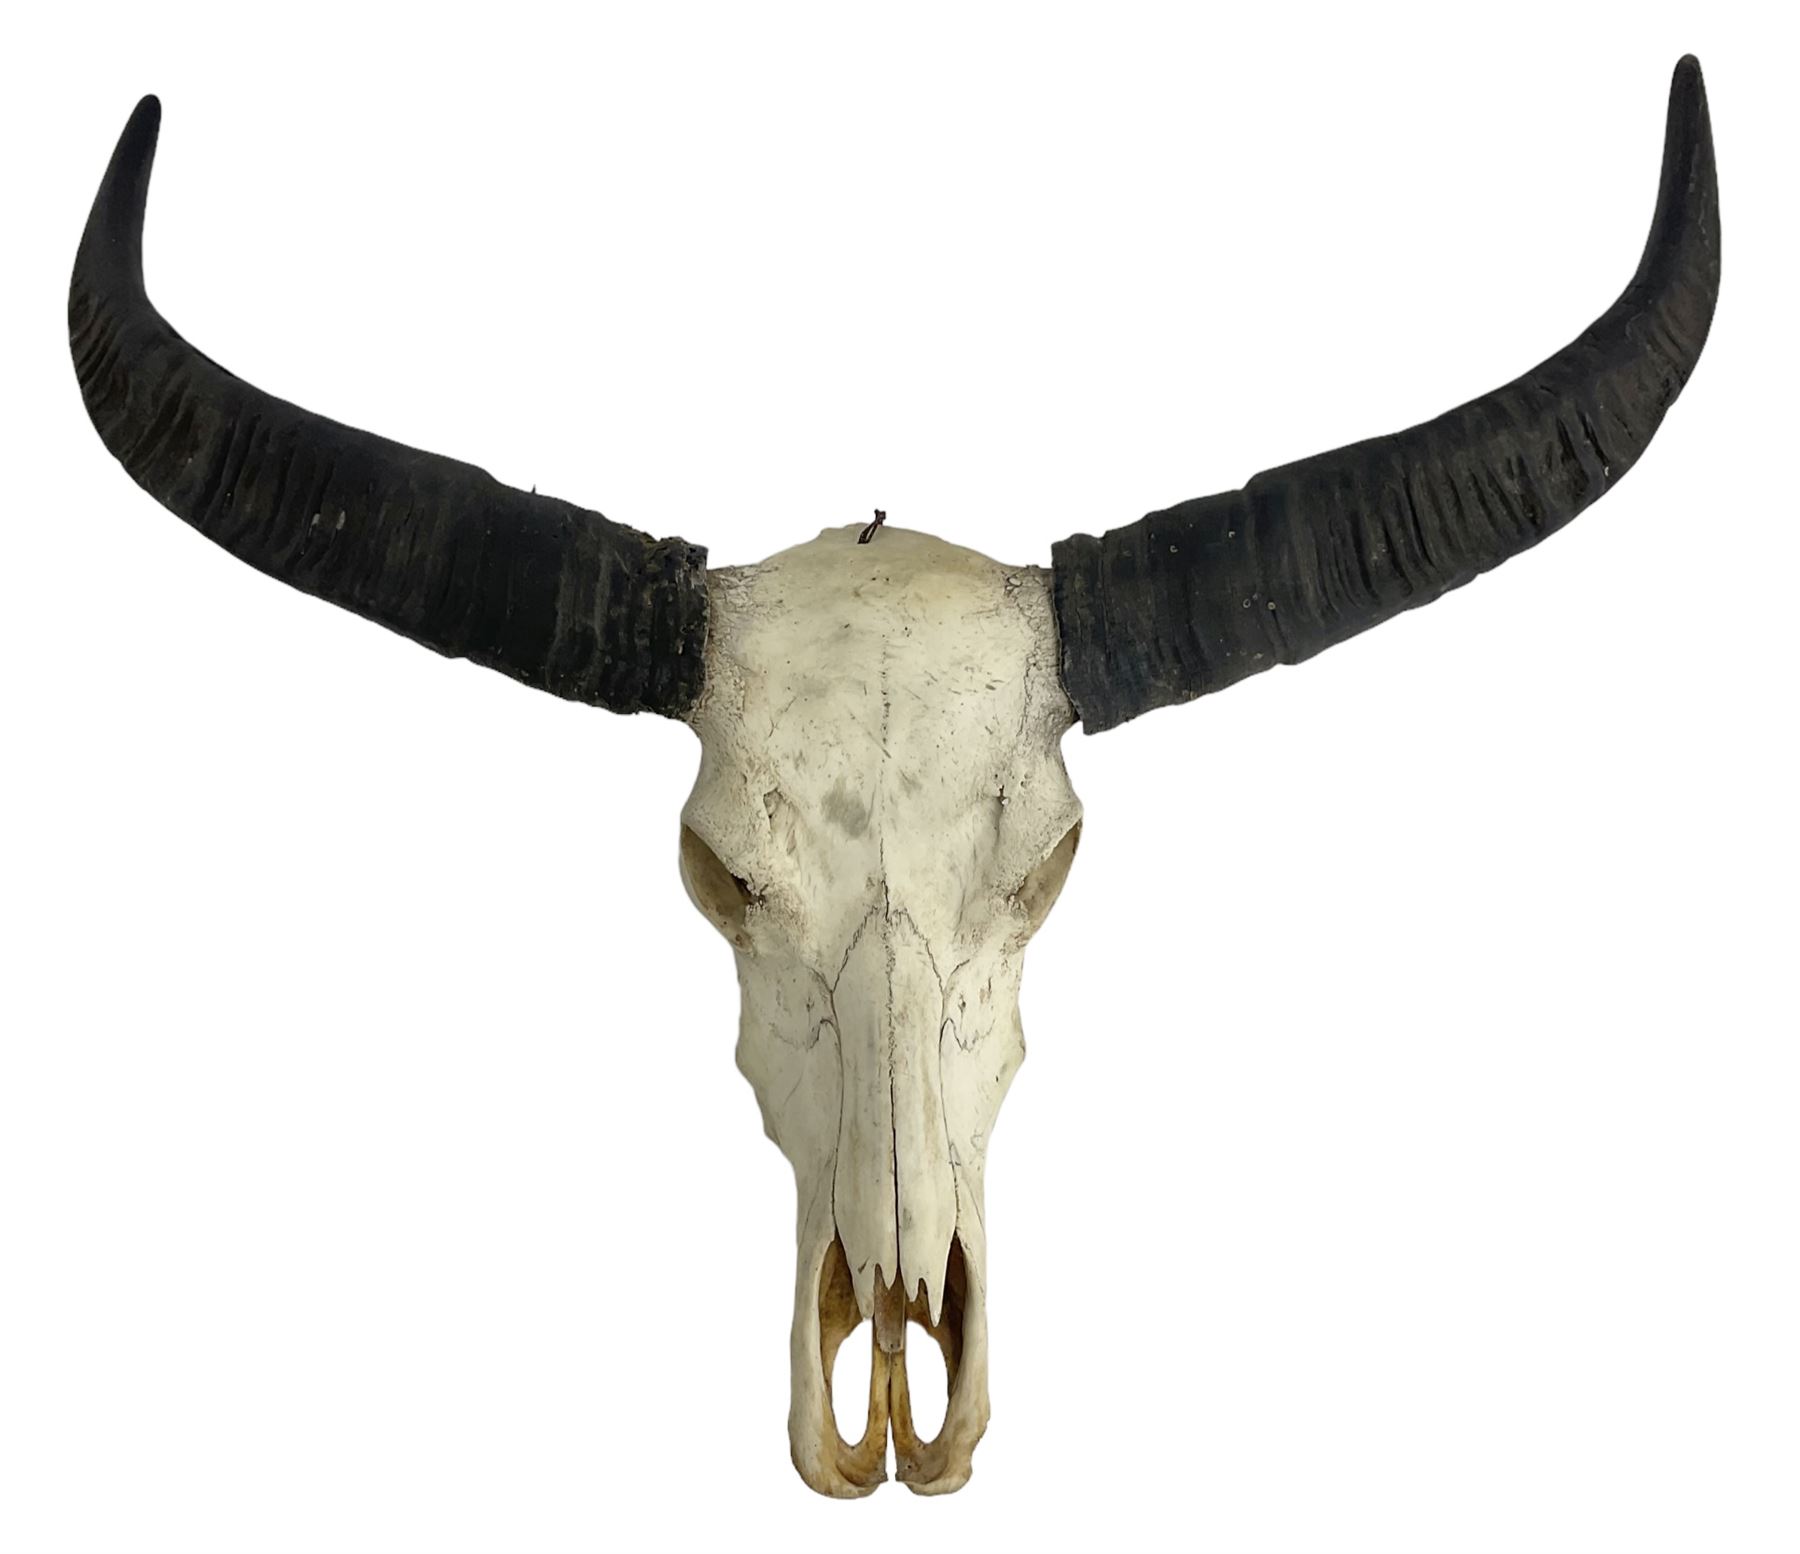 Skulls/Horns: Asian Wild Water Buffalo (Bubalus arnee)